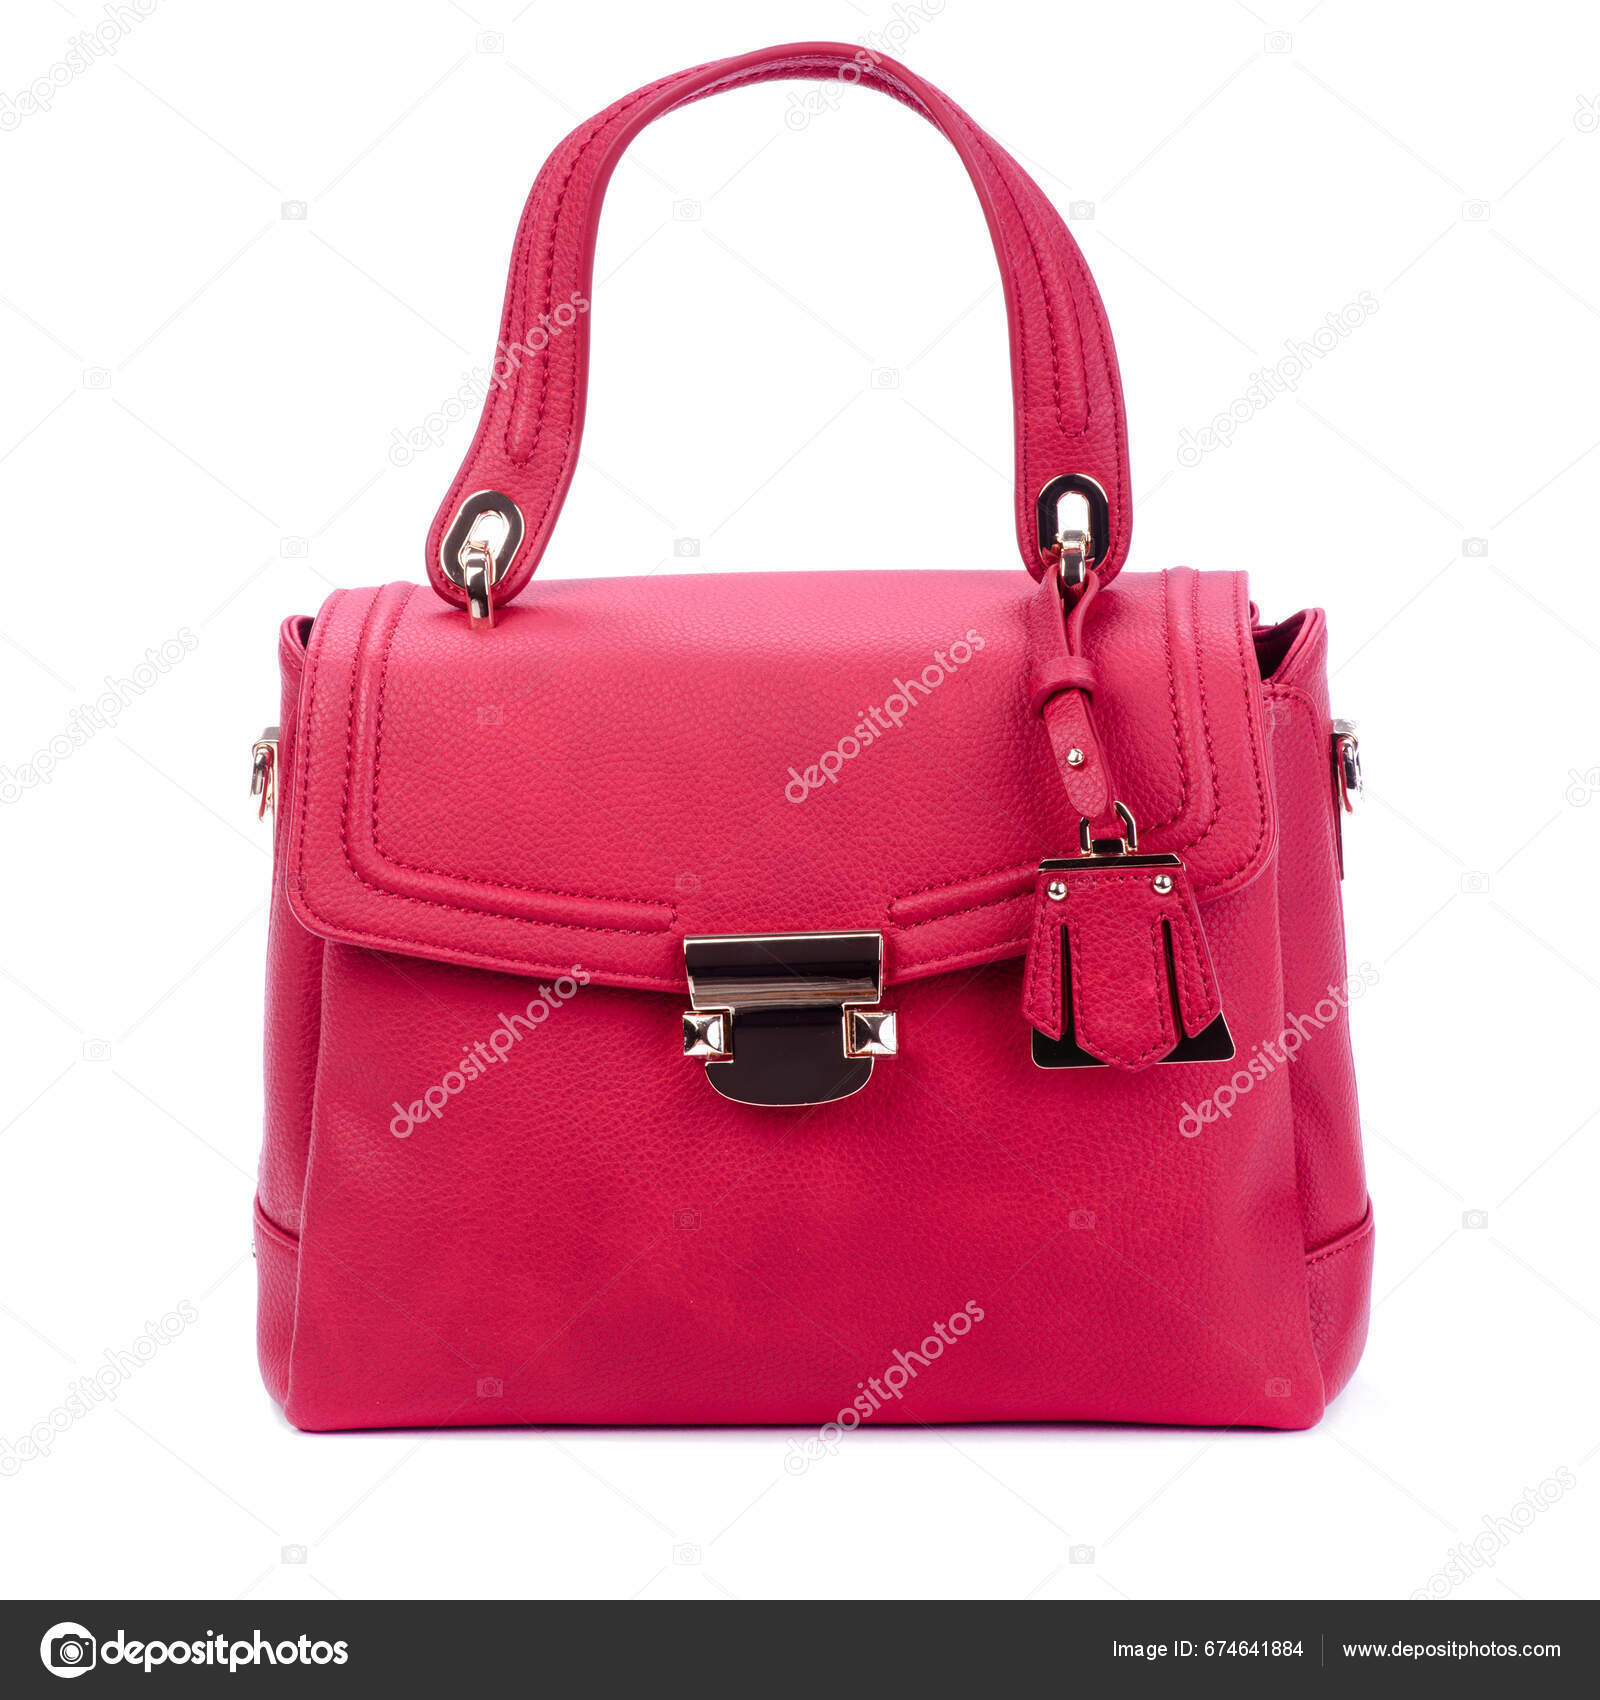 Elegant top sale handbag For Stylish And Trendy Looks 